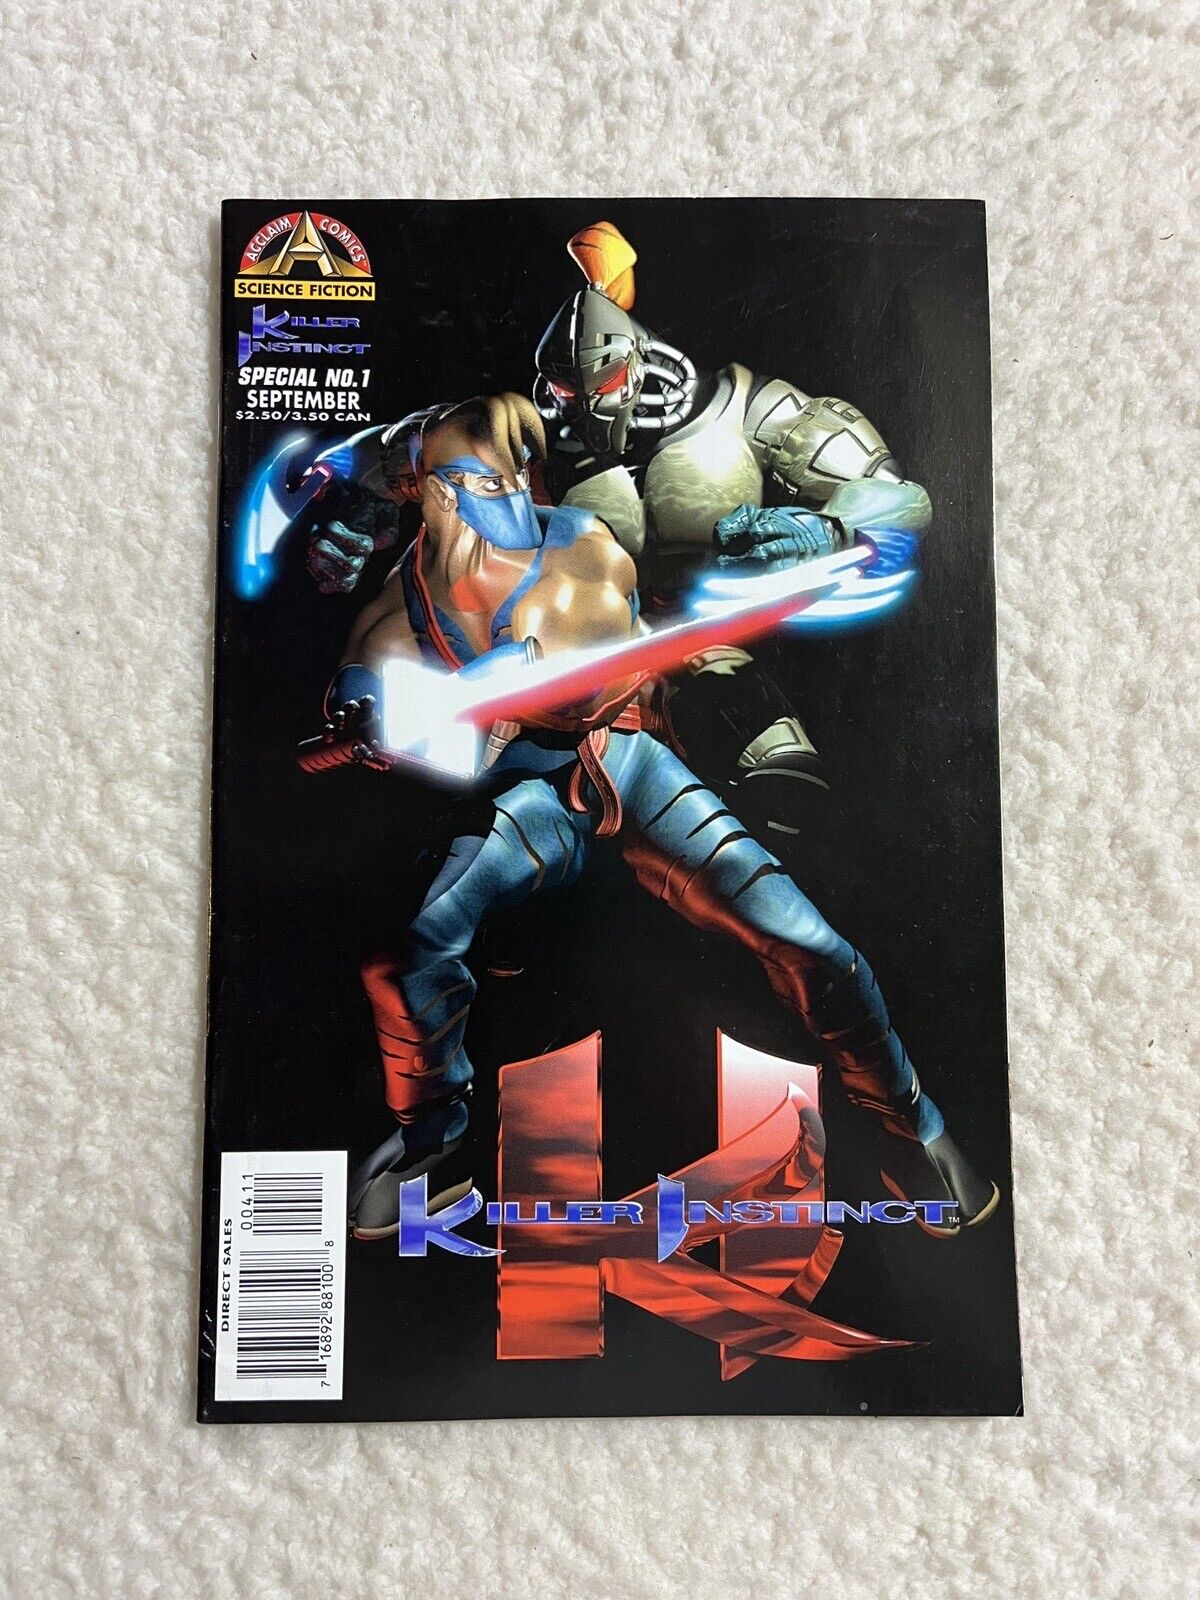 Killer Instinct #1 Special Acclaim Comics 1996 Video Game Book